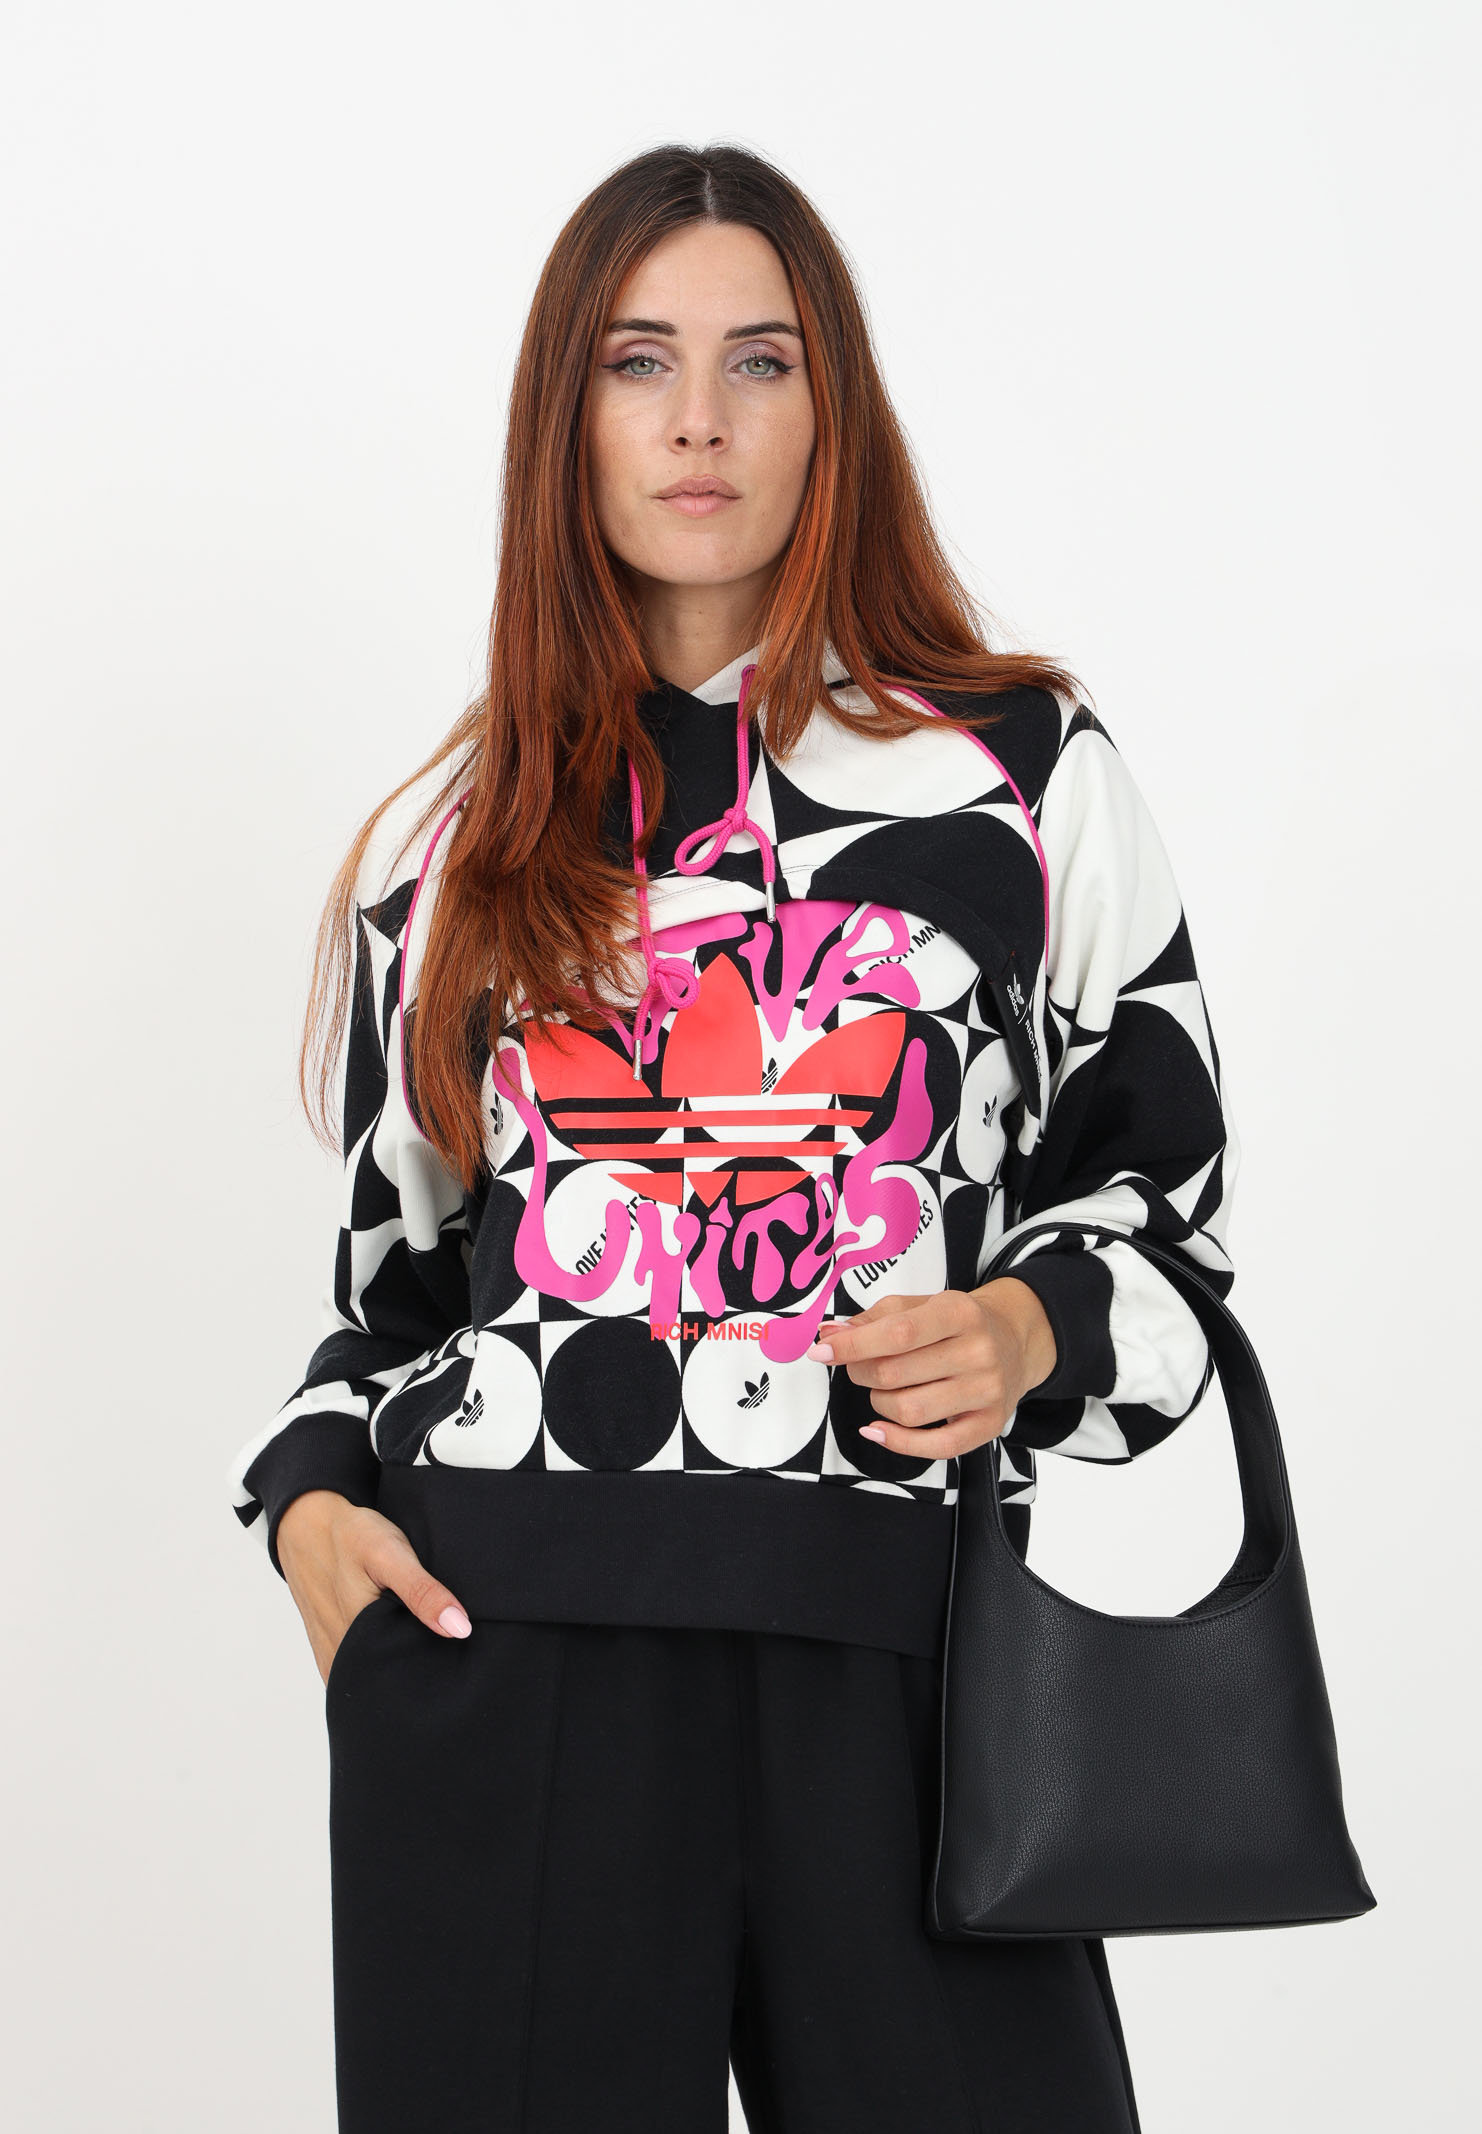 Black and white hooded sweatshirt for women ADIDAS ORIGINALS | II0903.